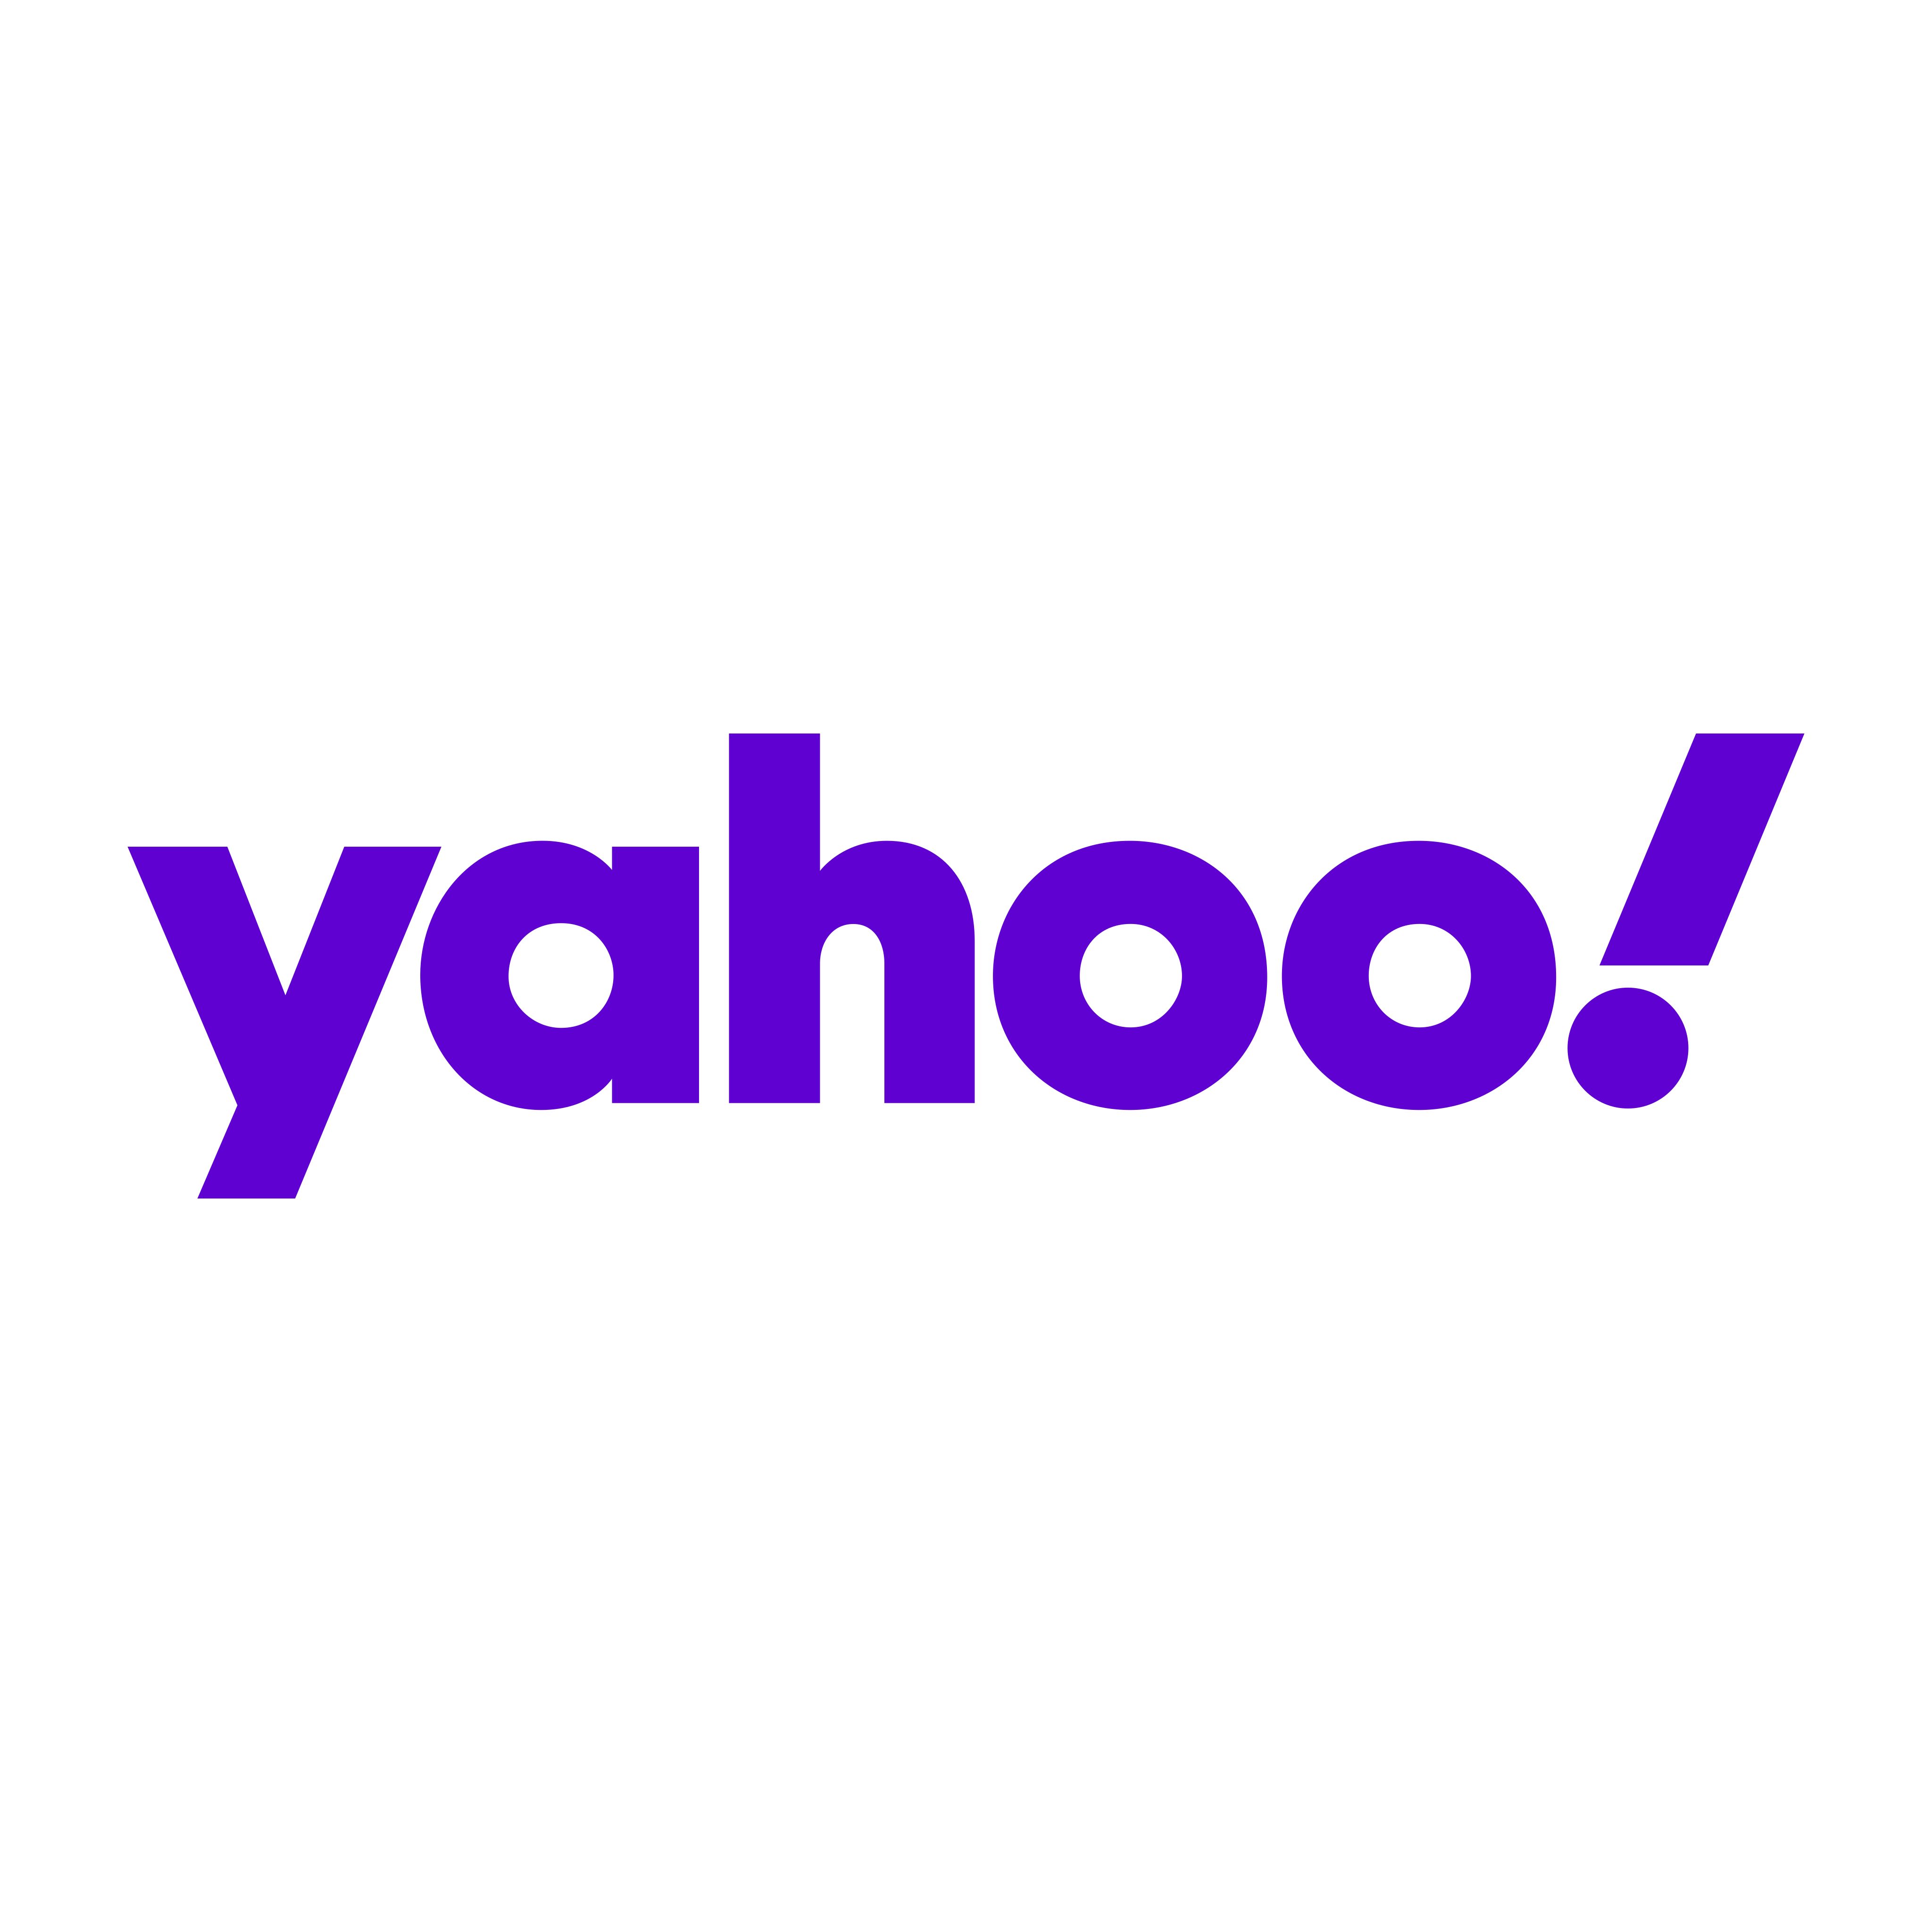 yahoo logo 0 - Yahoo! Logo